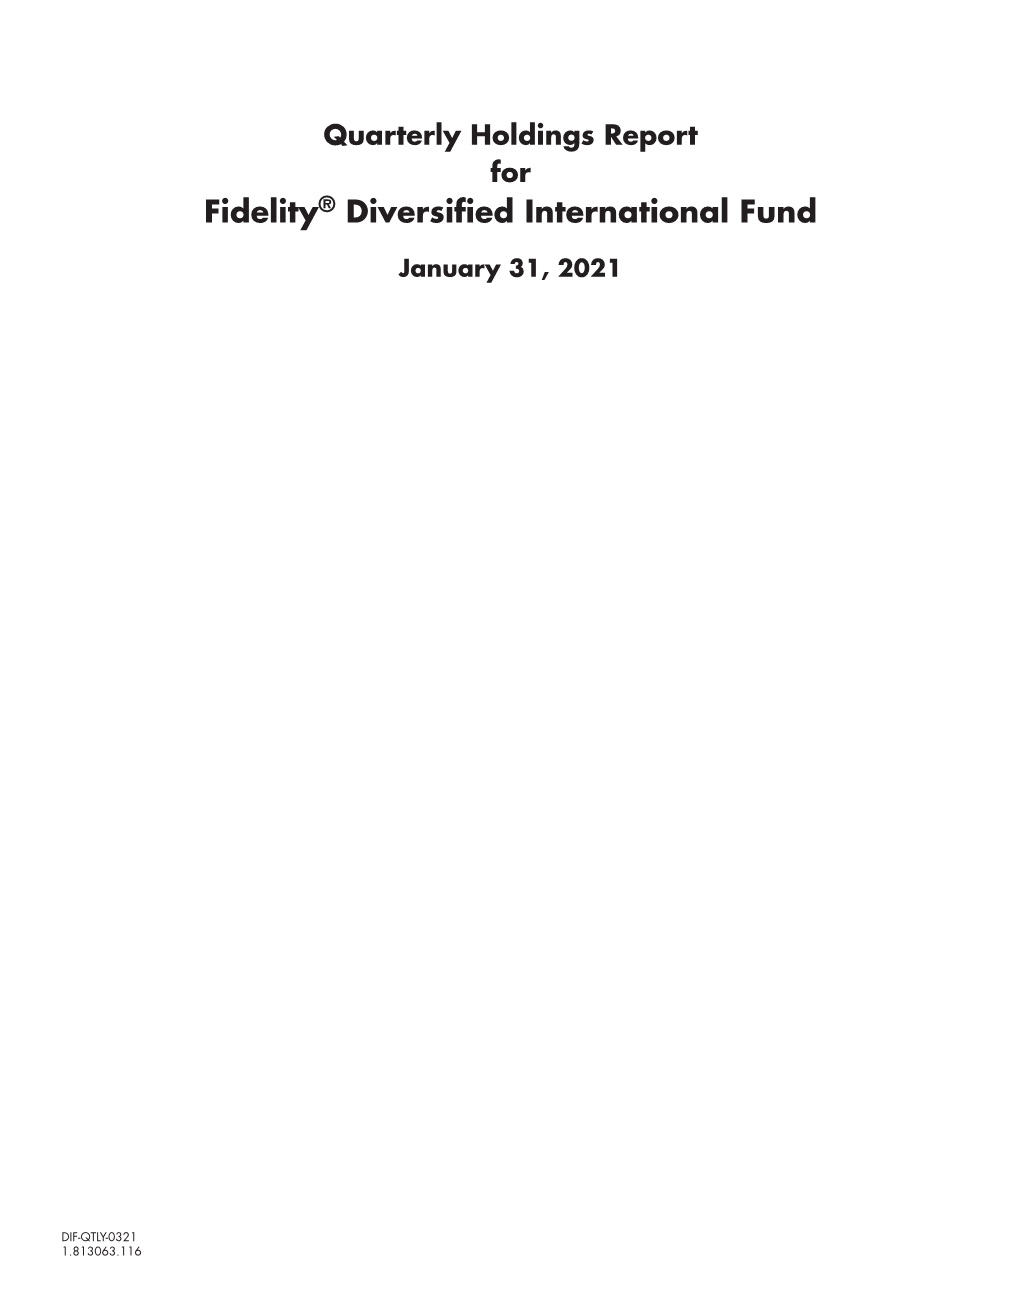 Fidelity® Diversified International Fund